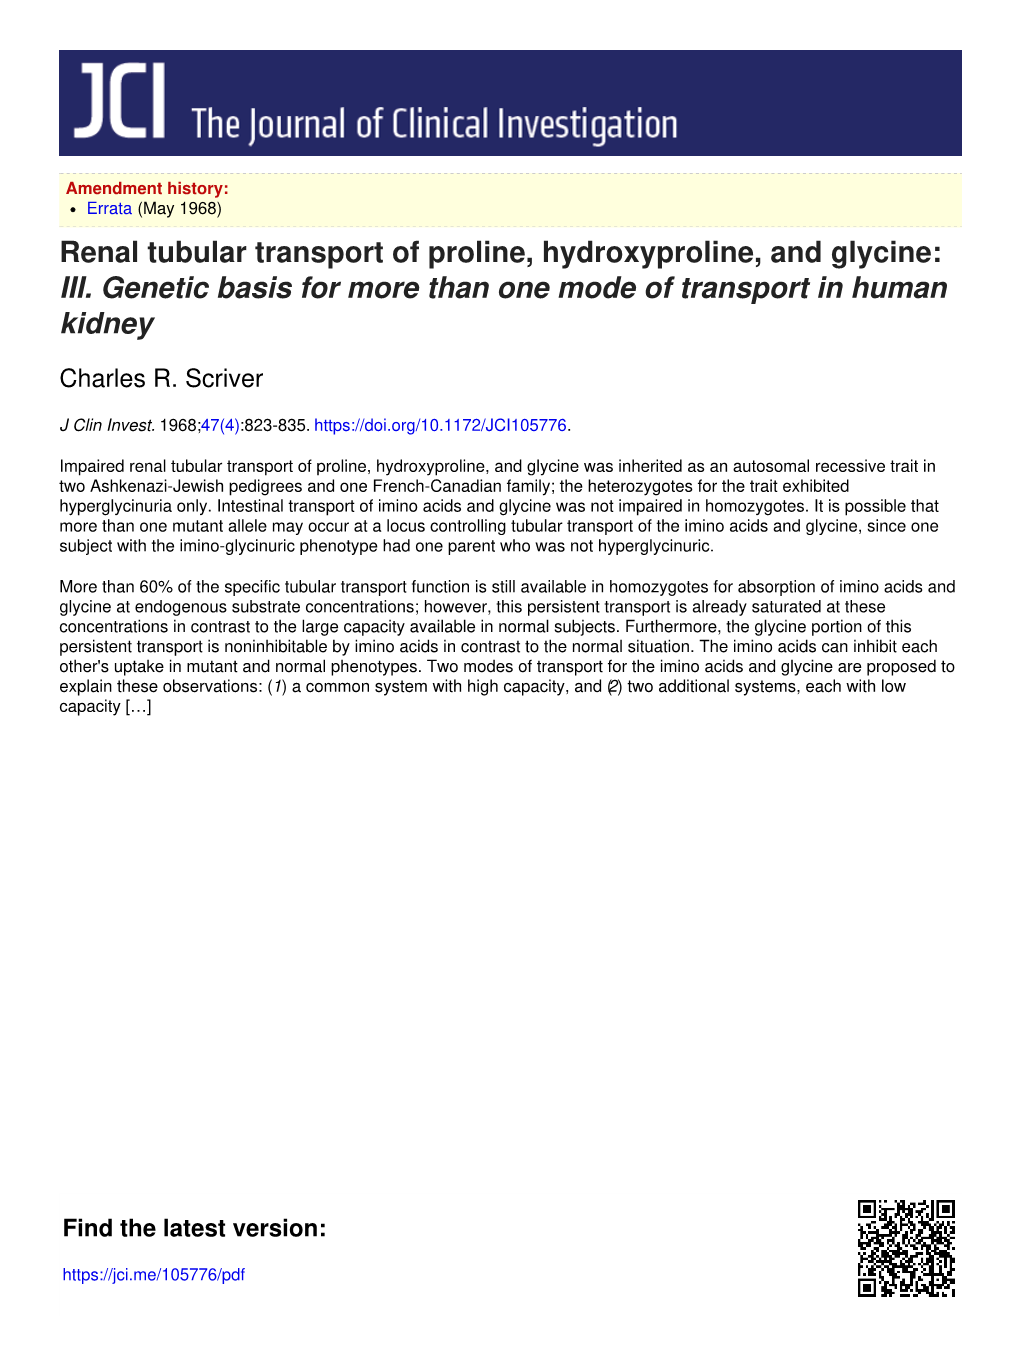 Renal Tubular Transport of Proline, Hydroxyproline, and Glycine: III